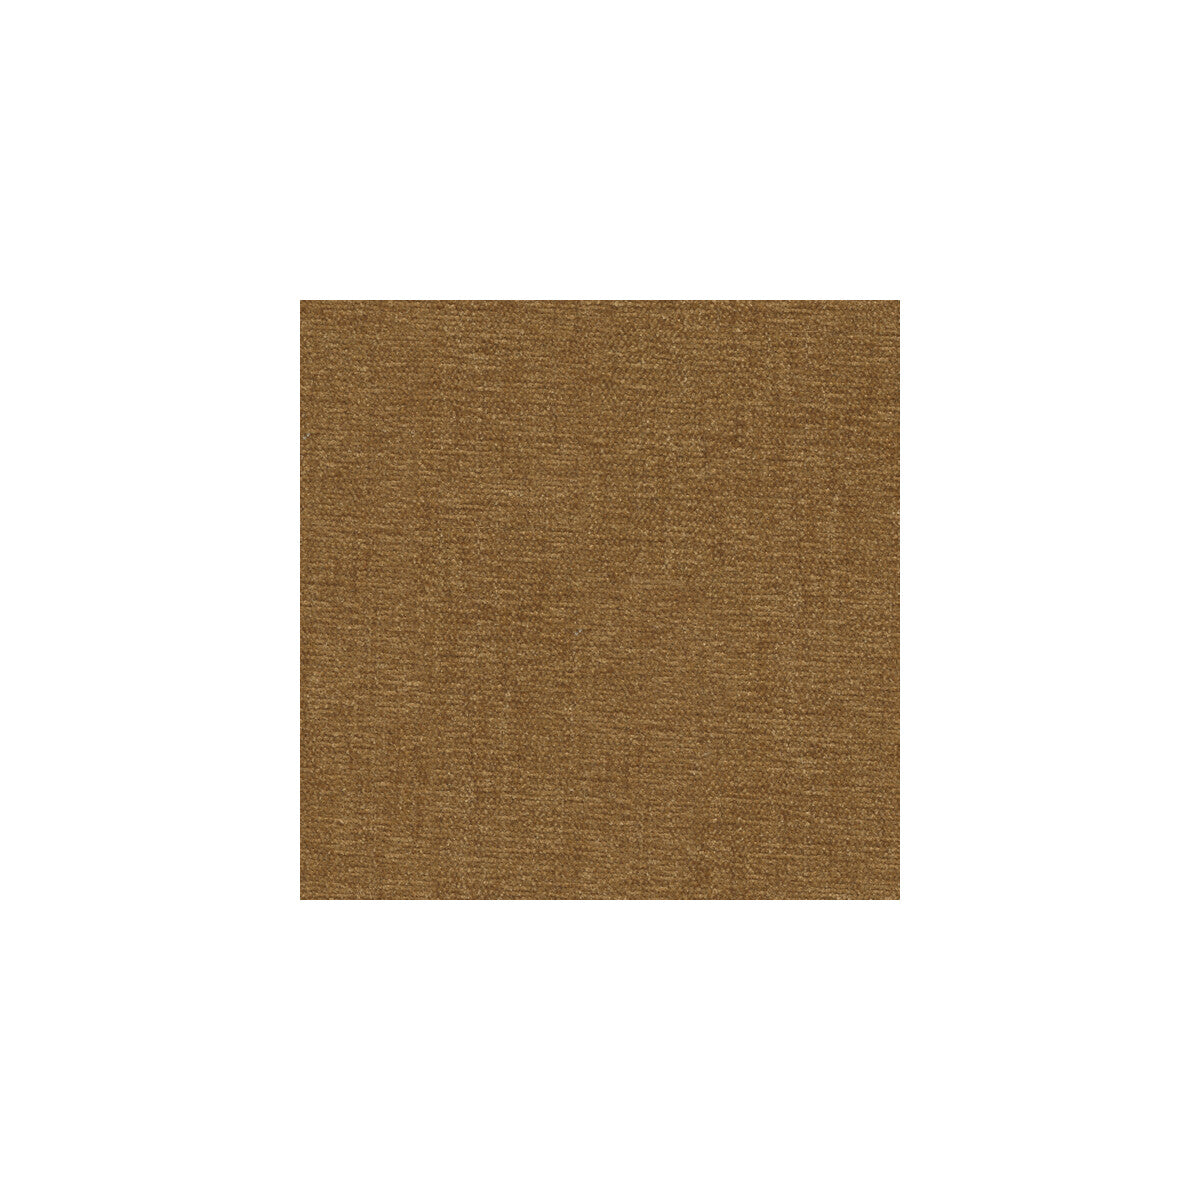 Lavish fabric in caramel color - pattern 26837.16.0 - by Kravet Smart